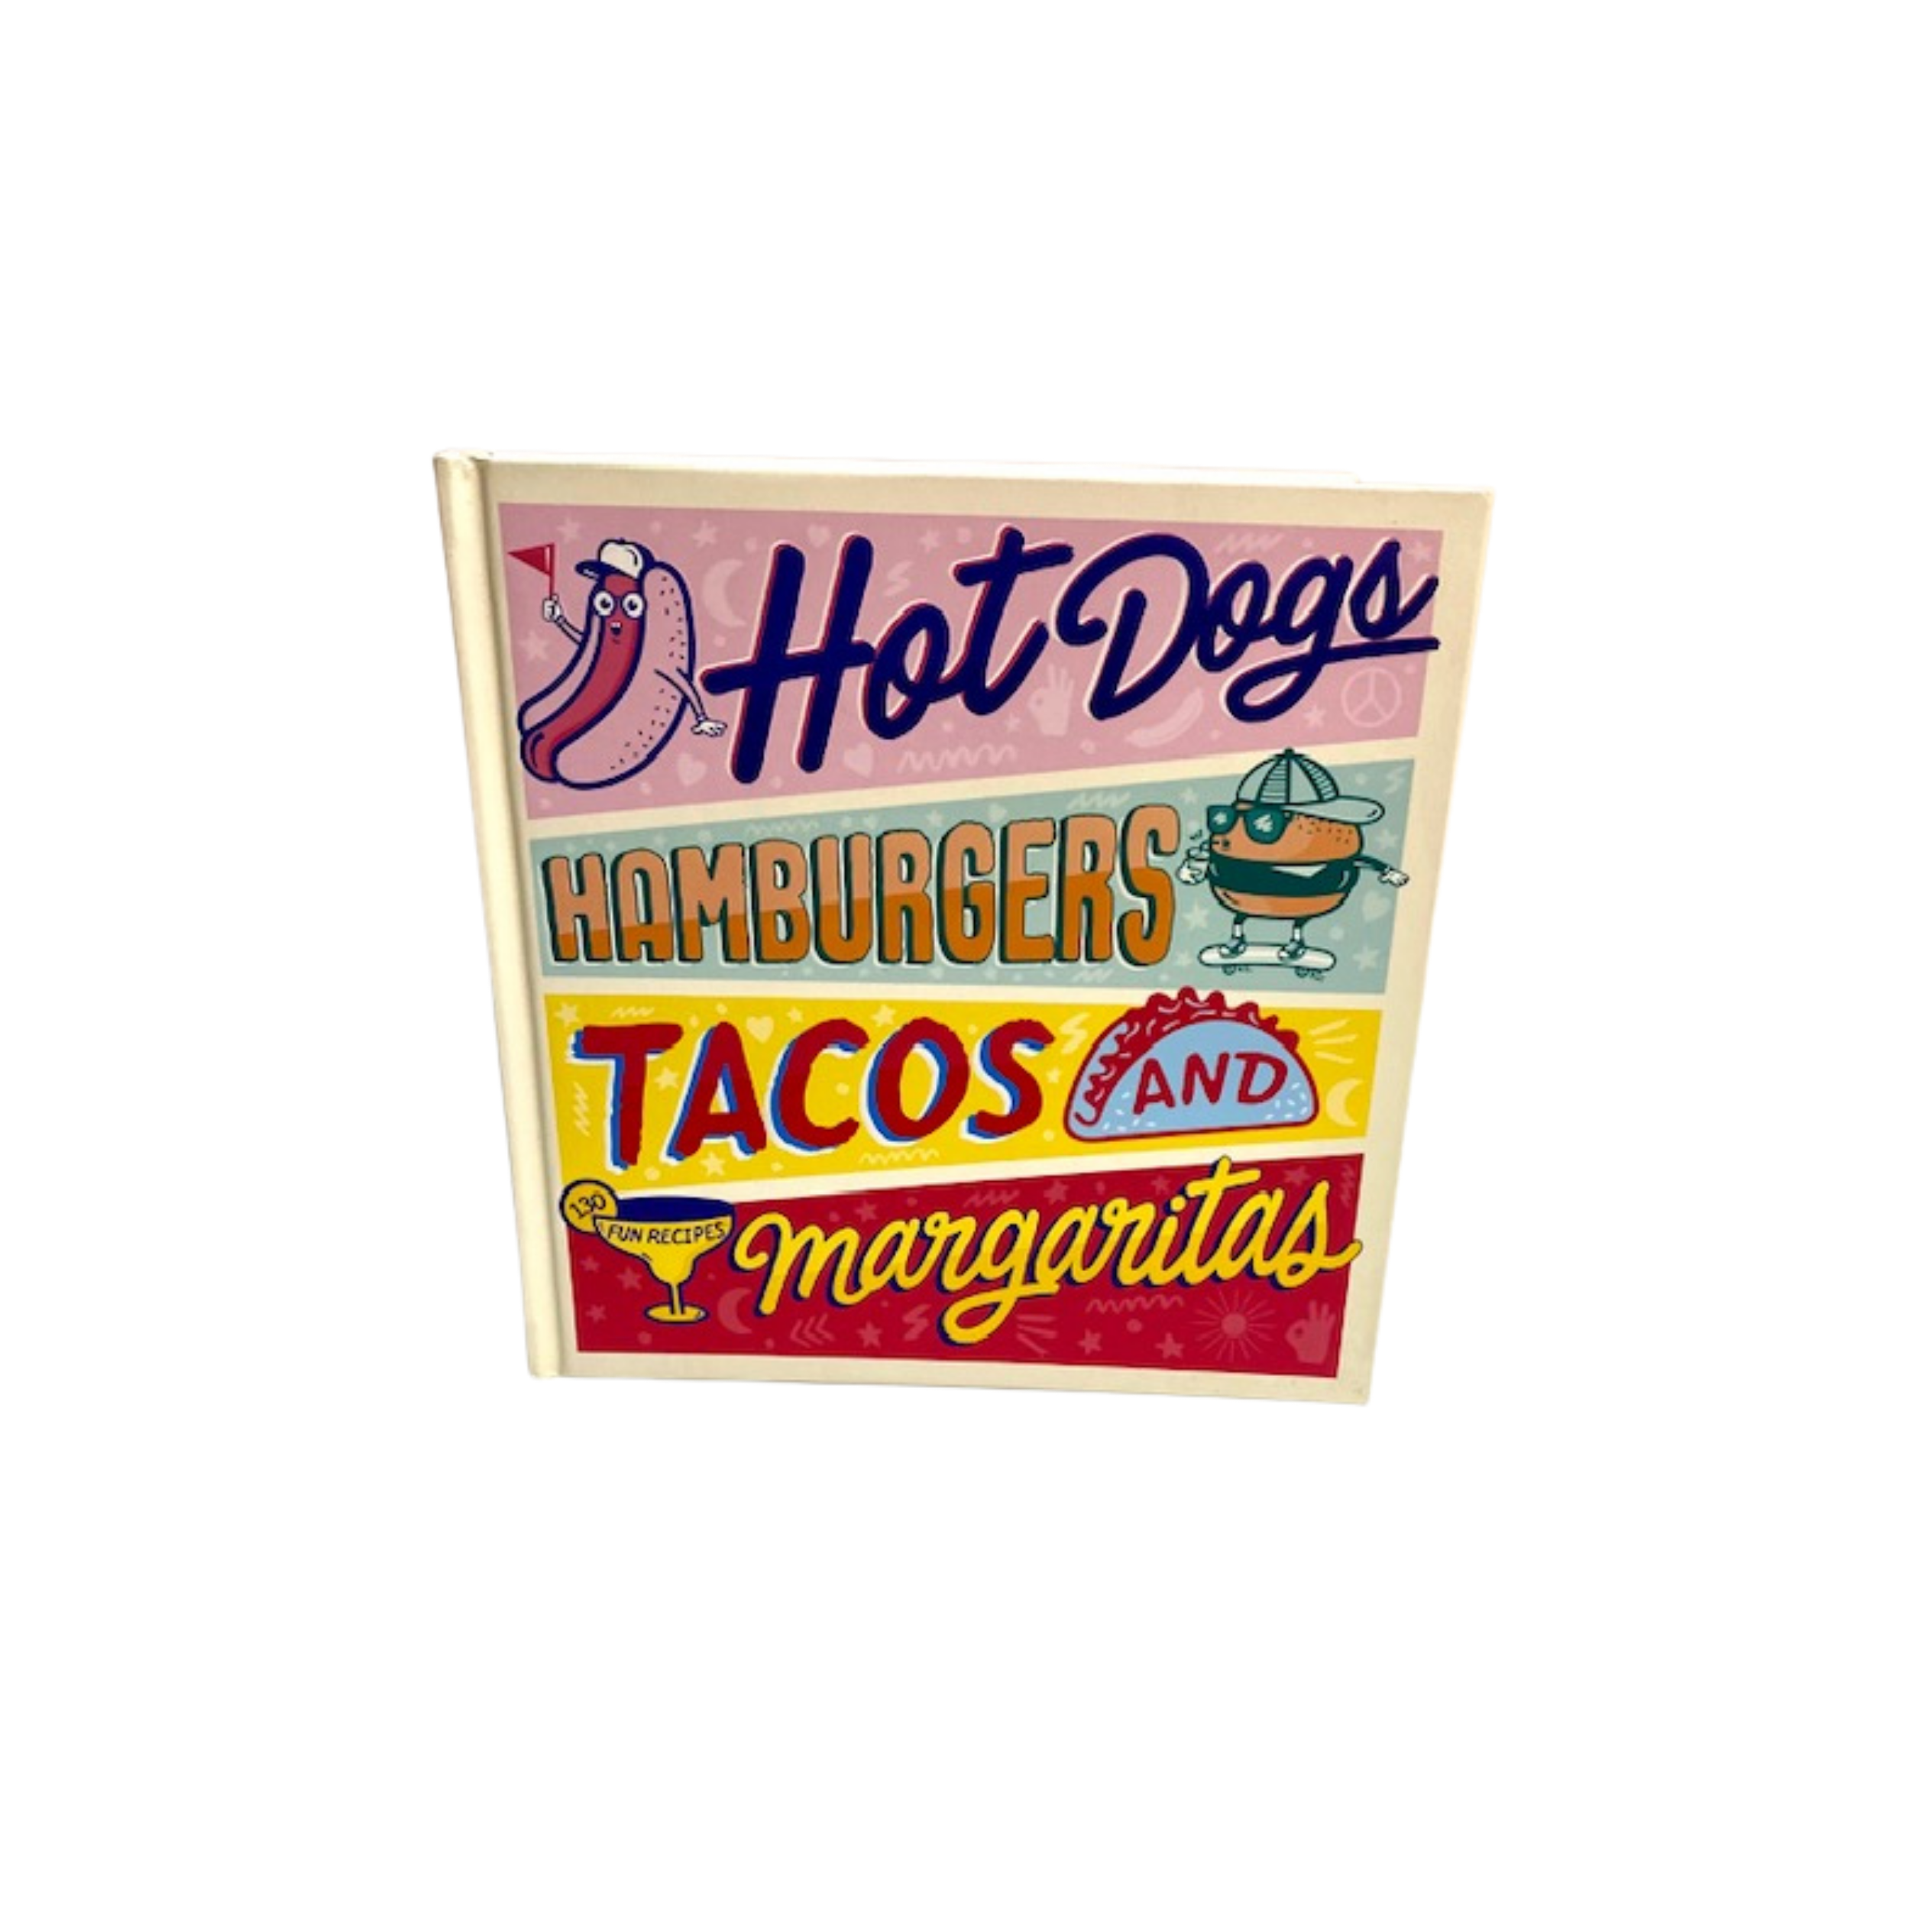 Hot Dogs, Hamburgers, Tacos